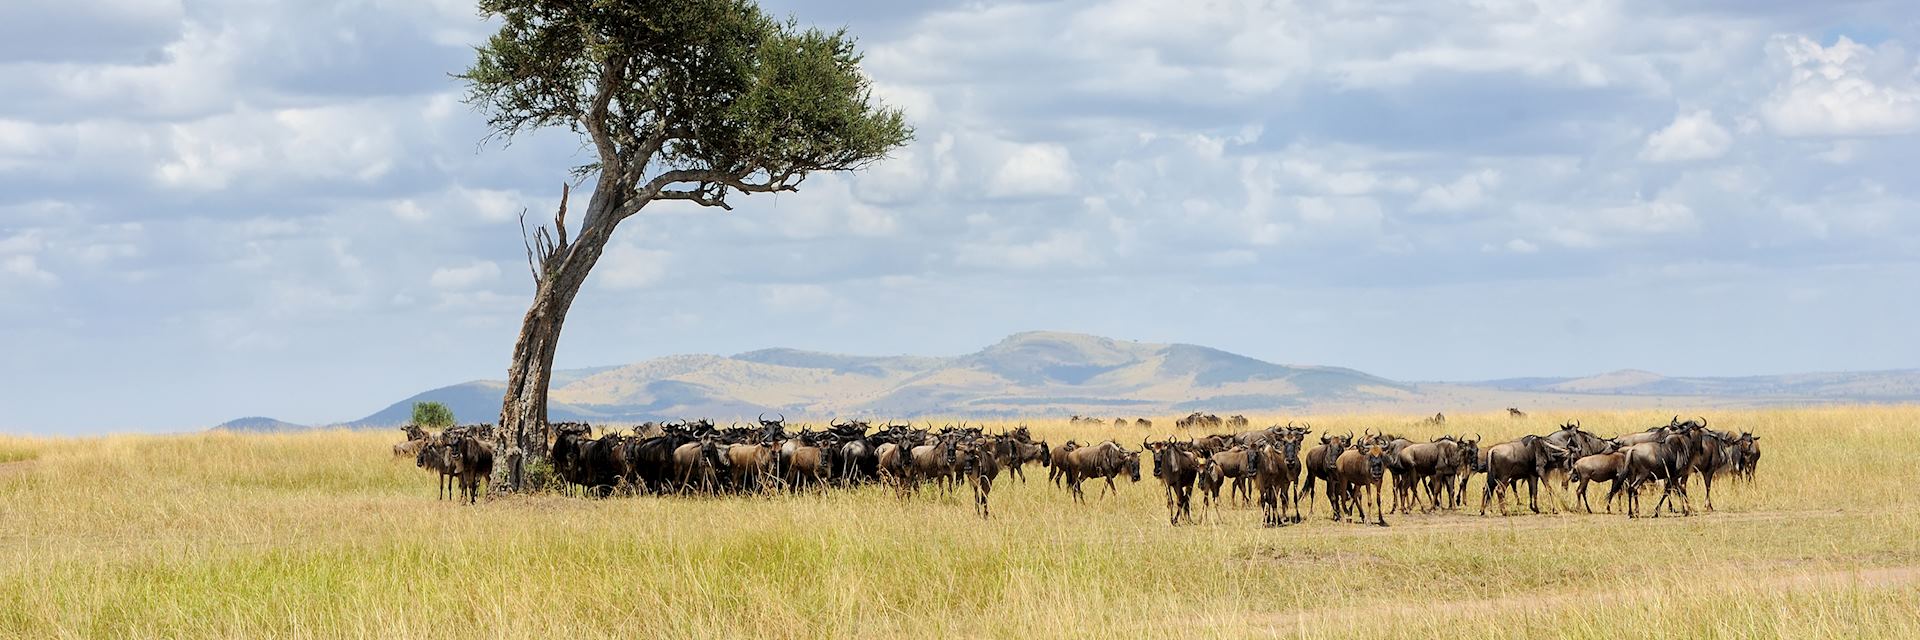 Wildebeest in the Masai Mara National Reserve